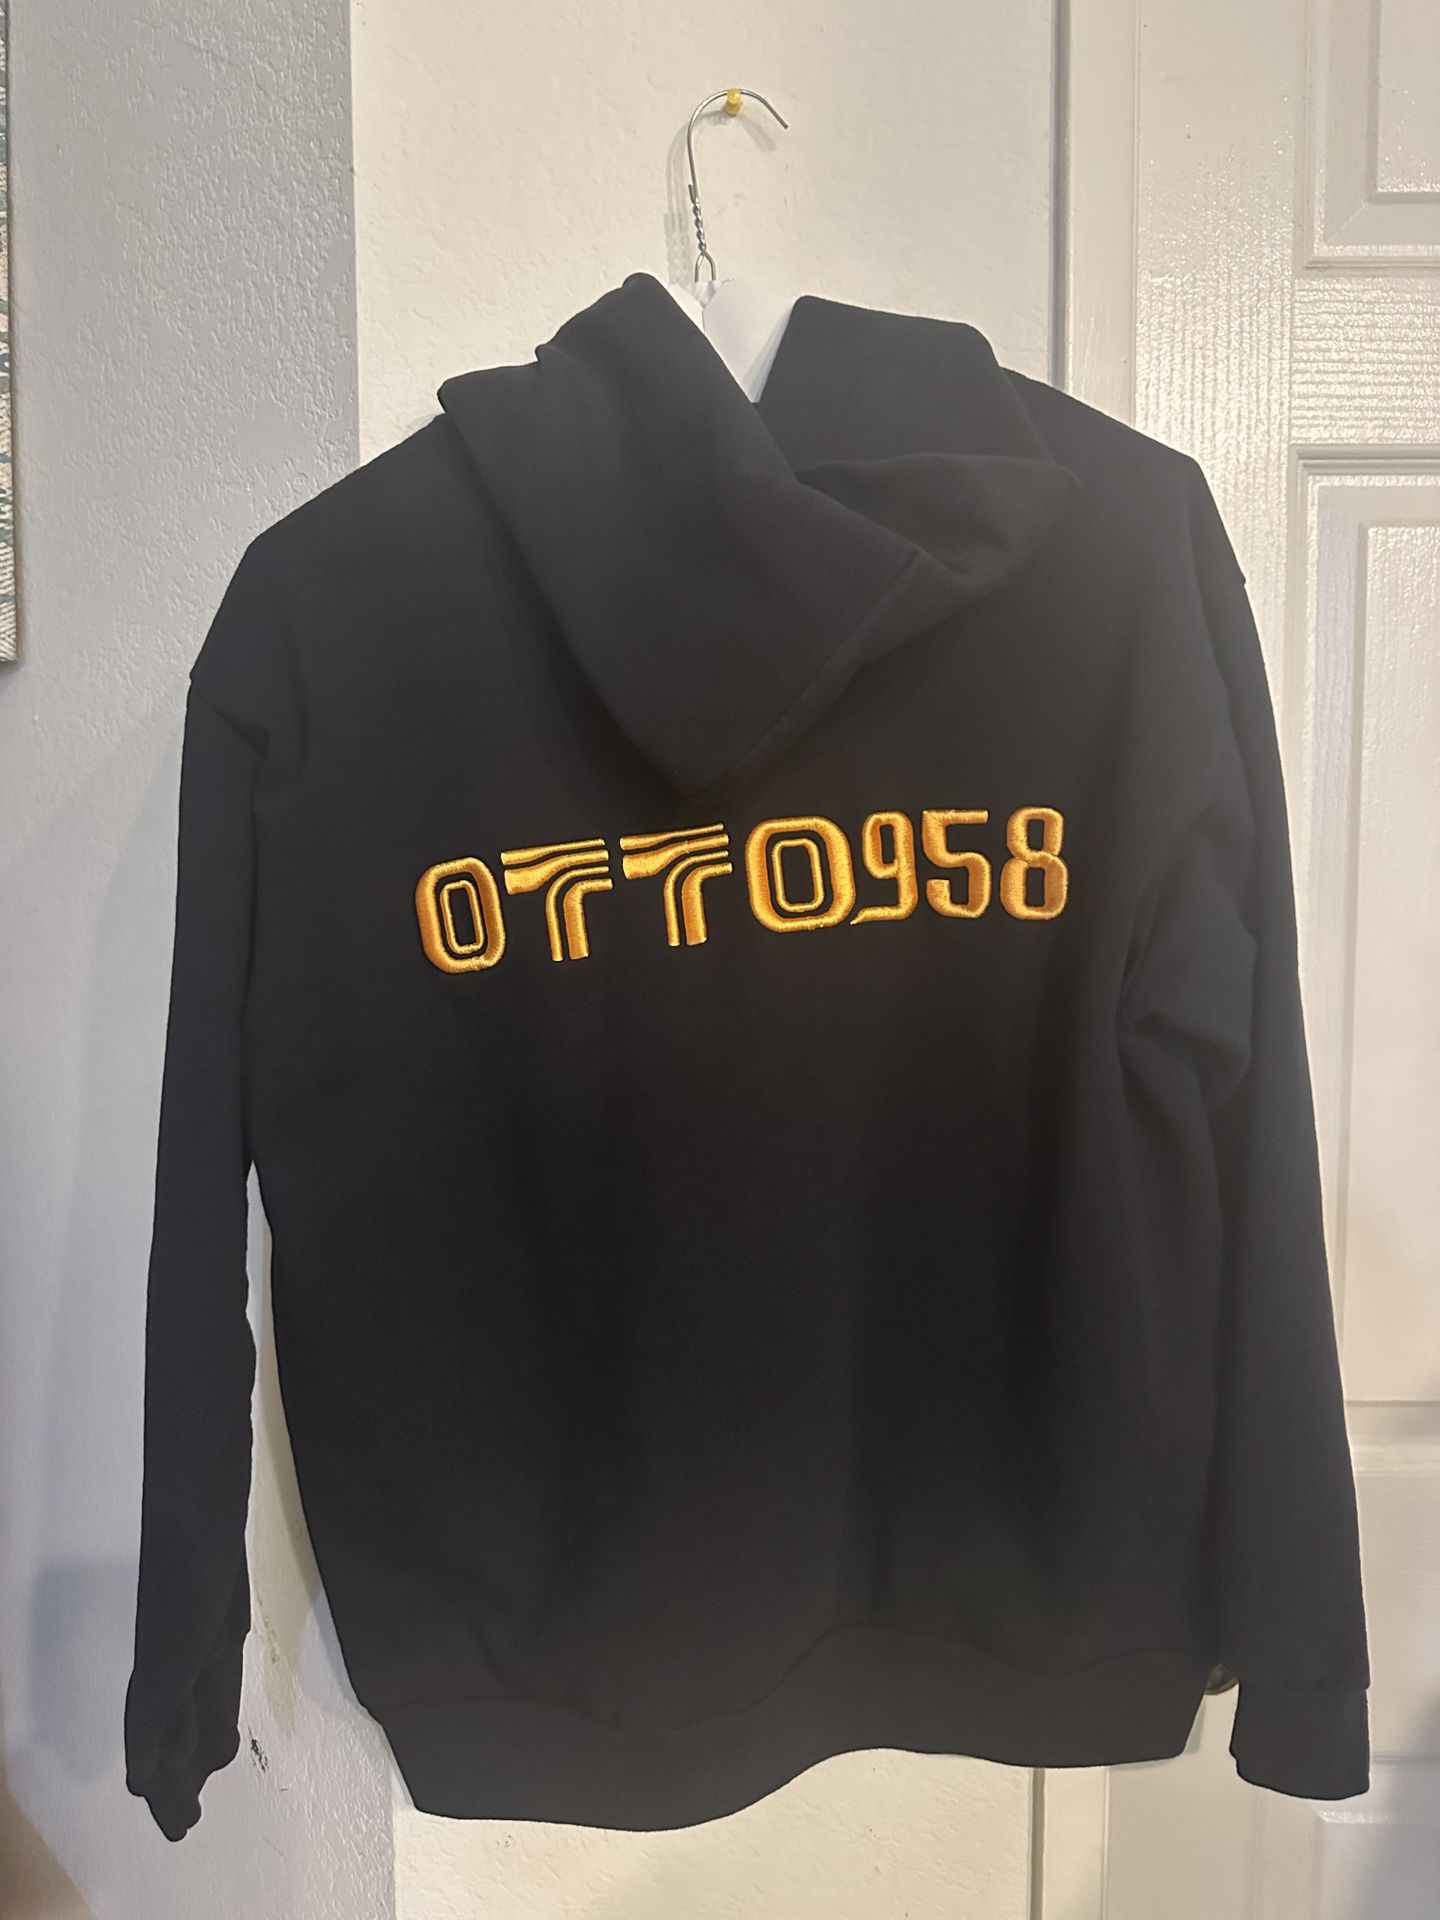 Otto 958 / Kiko Kostadinov uniform Gallery Hoodie for Sale in Rancho Santa  Margarita, CA - OfferUp